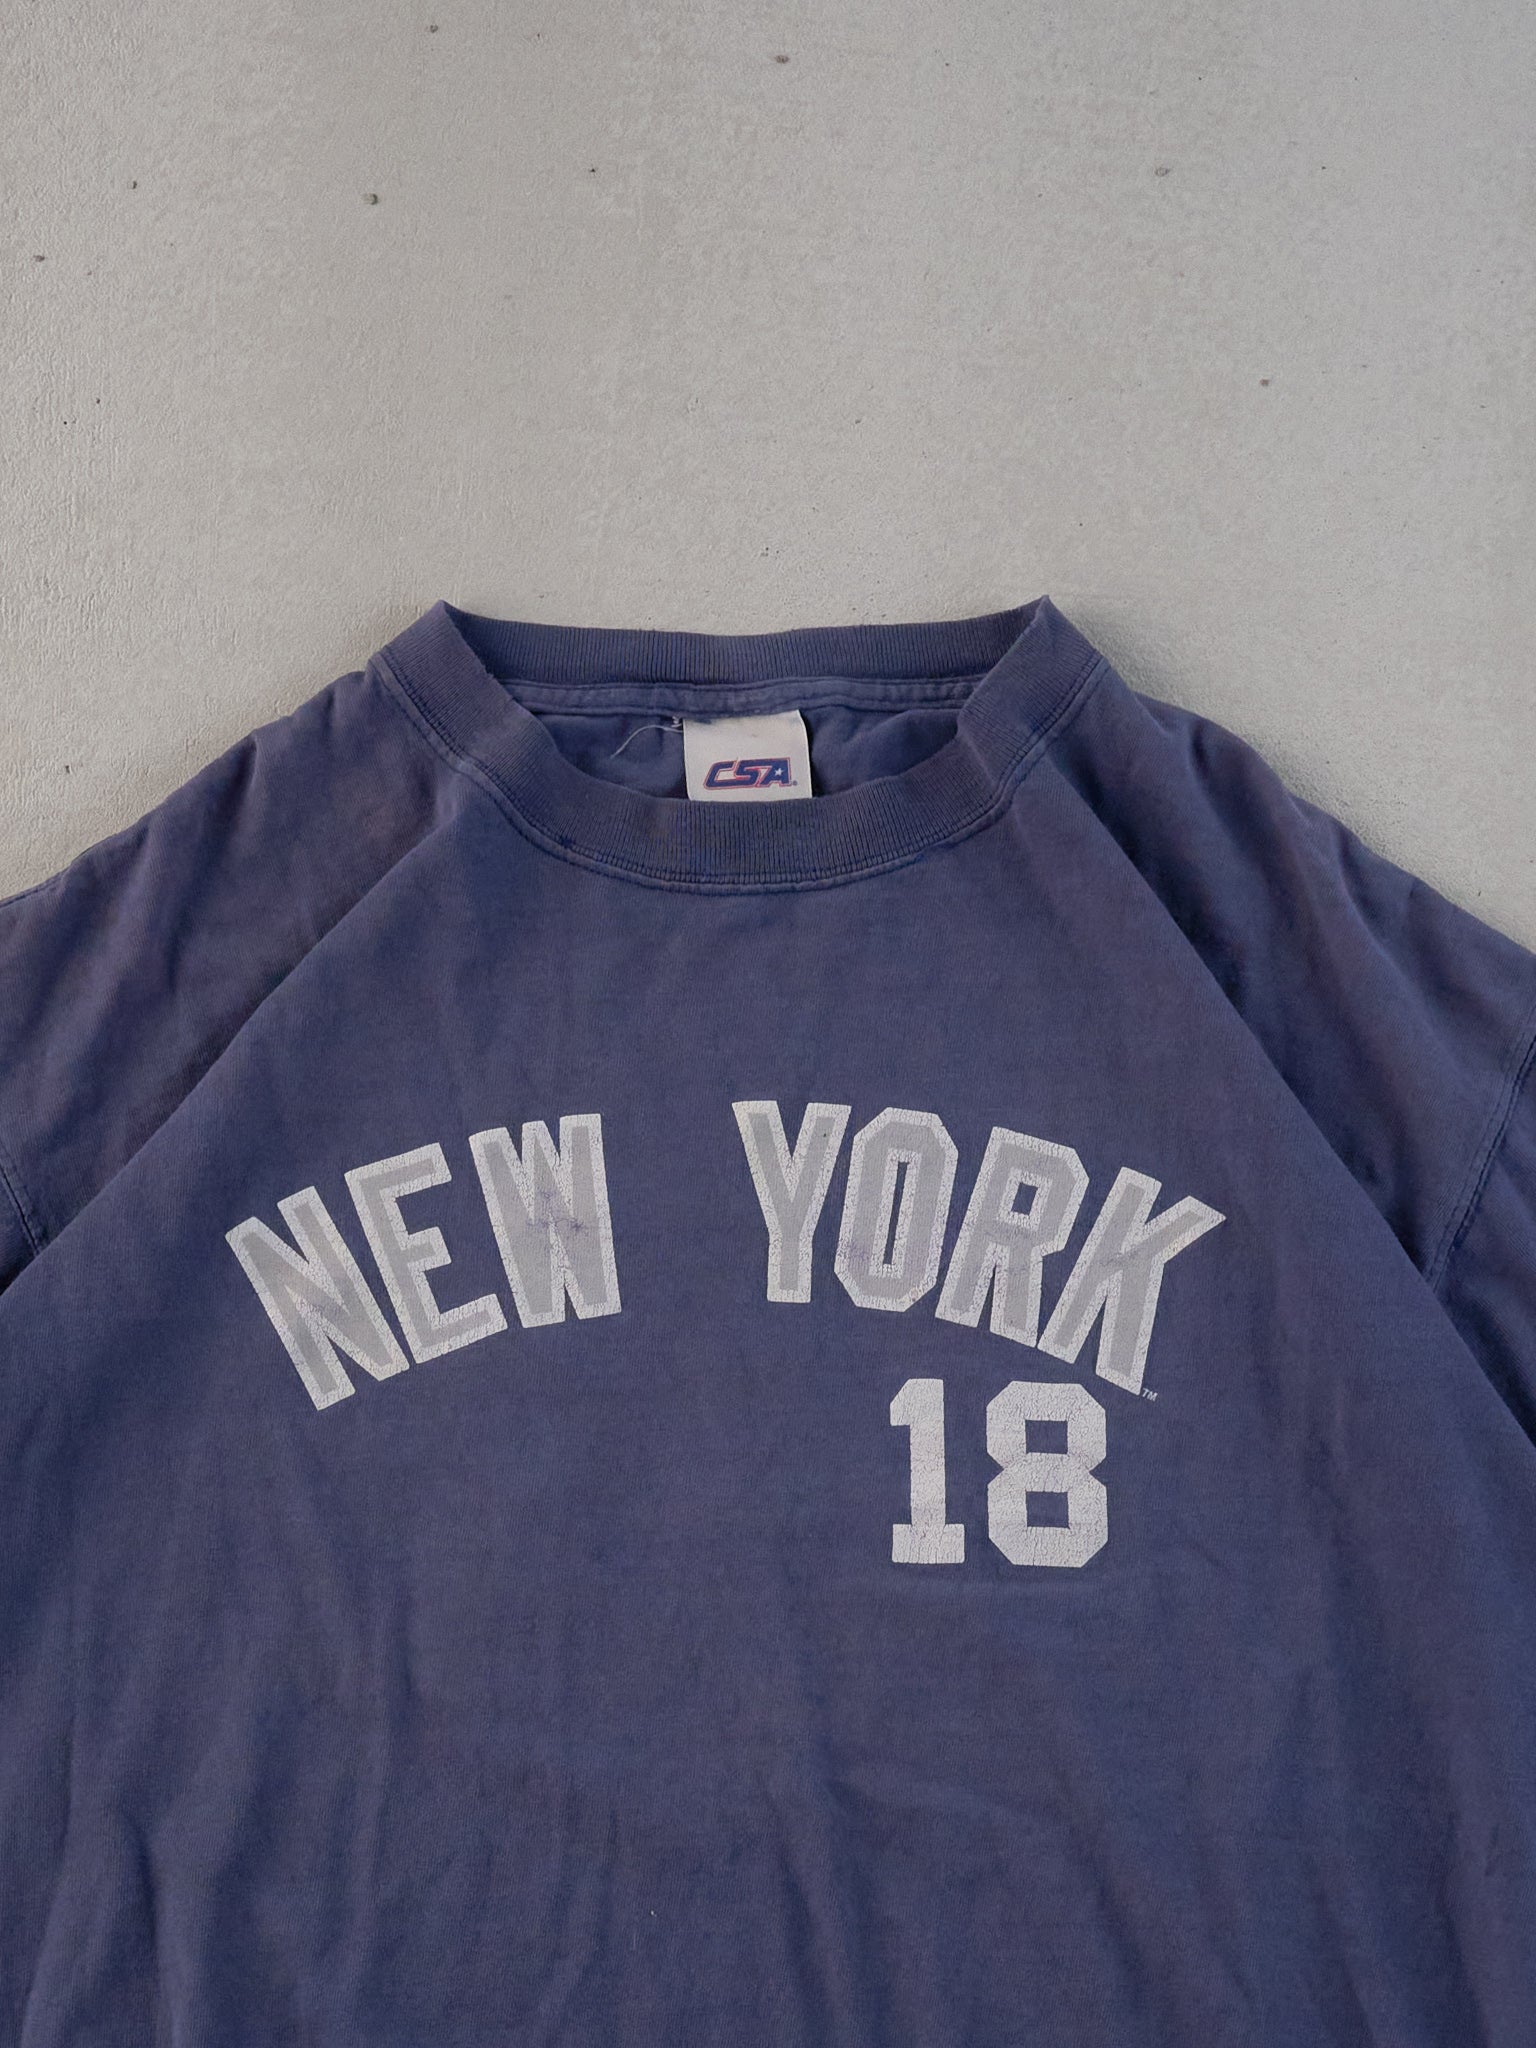 Vintage 05' Faded Blue New York Yankees Damon #18 Tee (L)